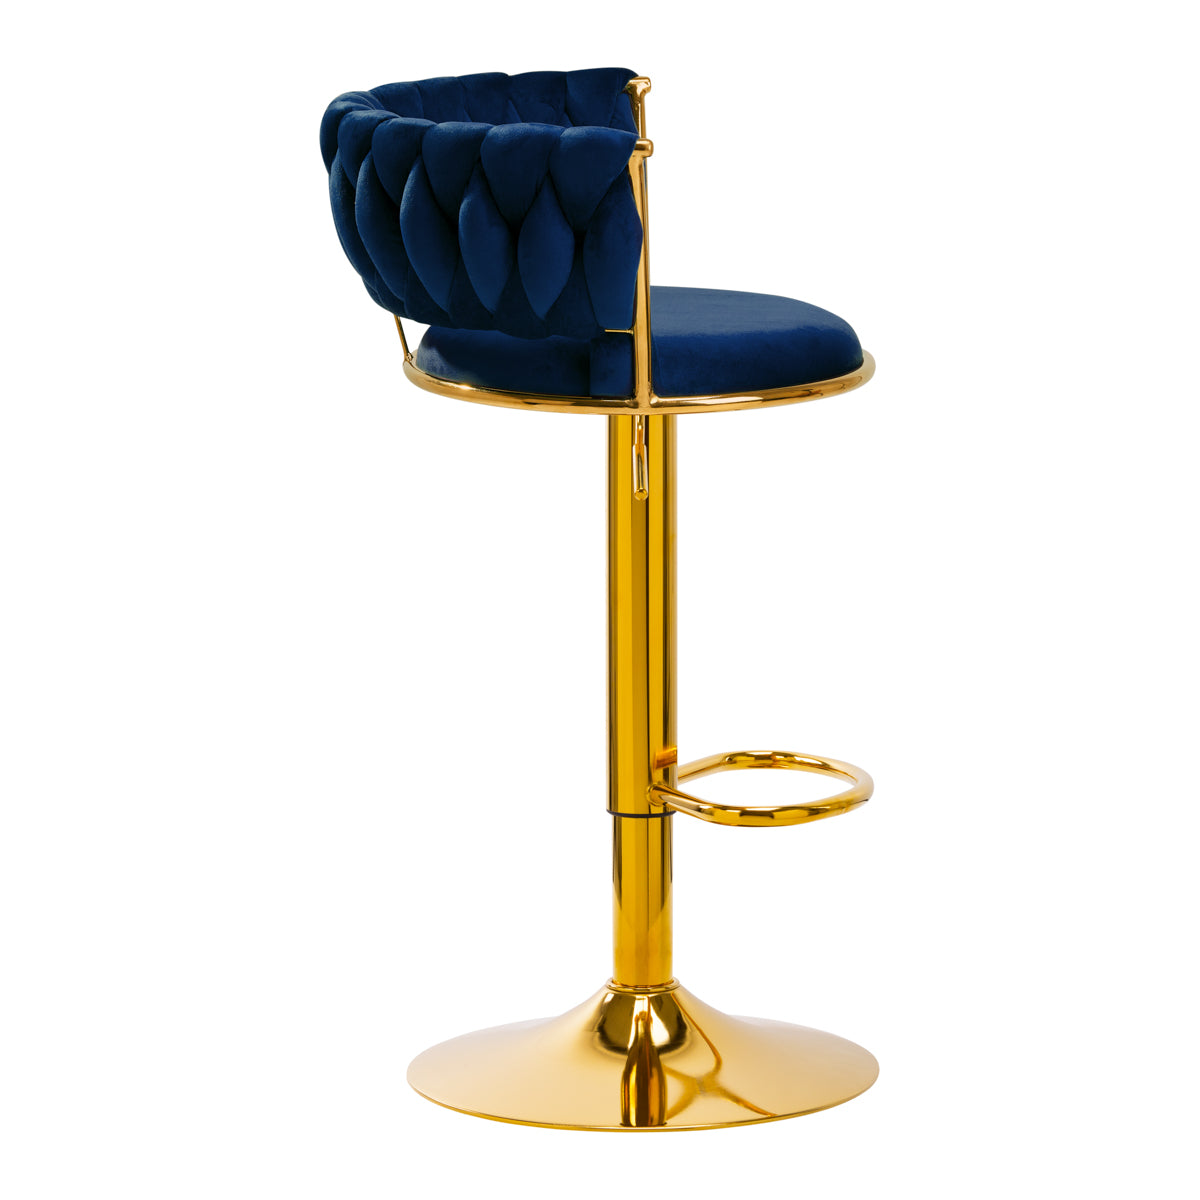 4Rico bar stool QS-B313a velvet navy blue 